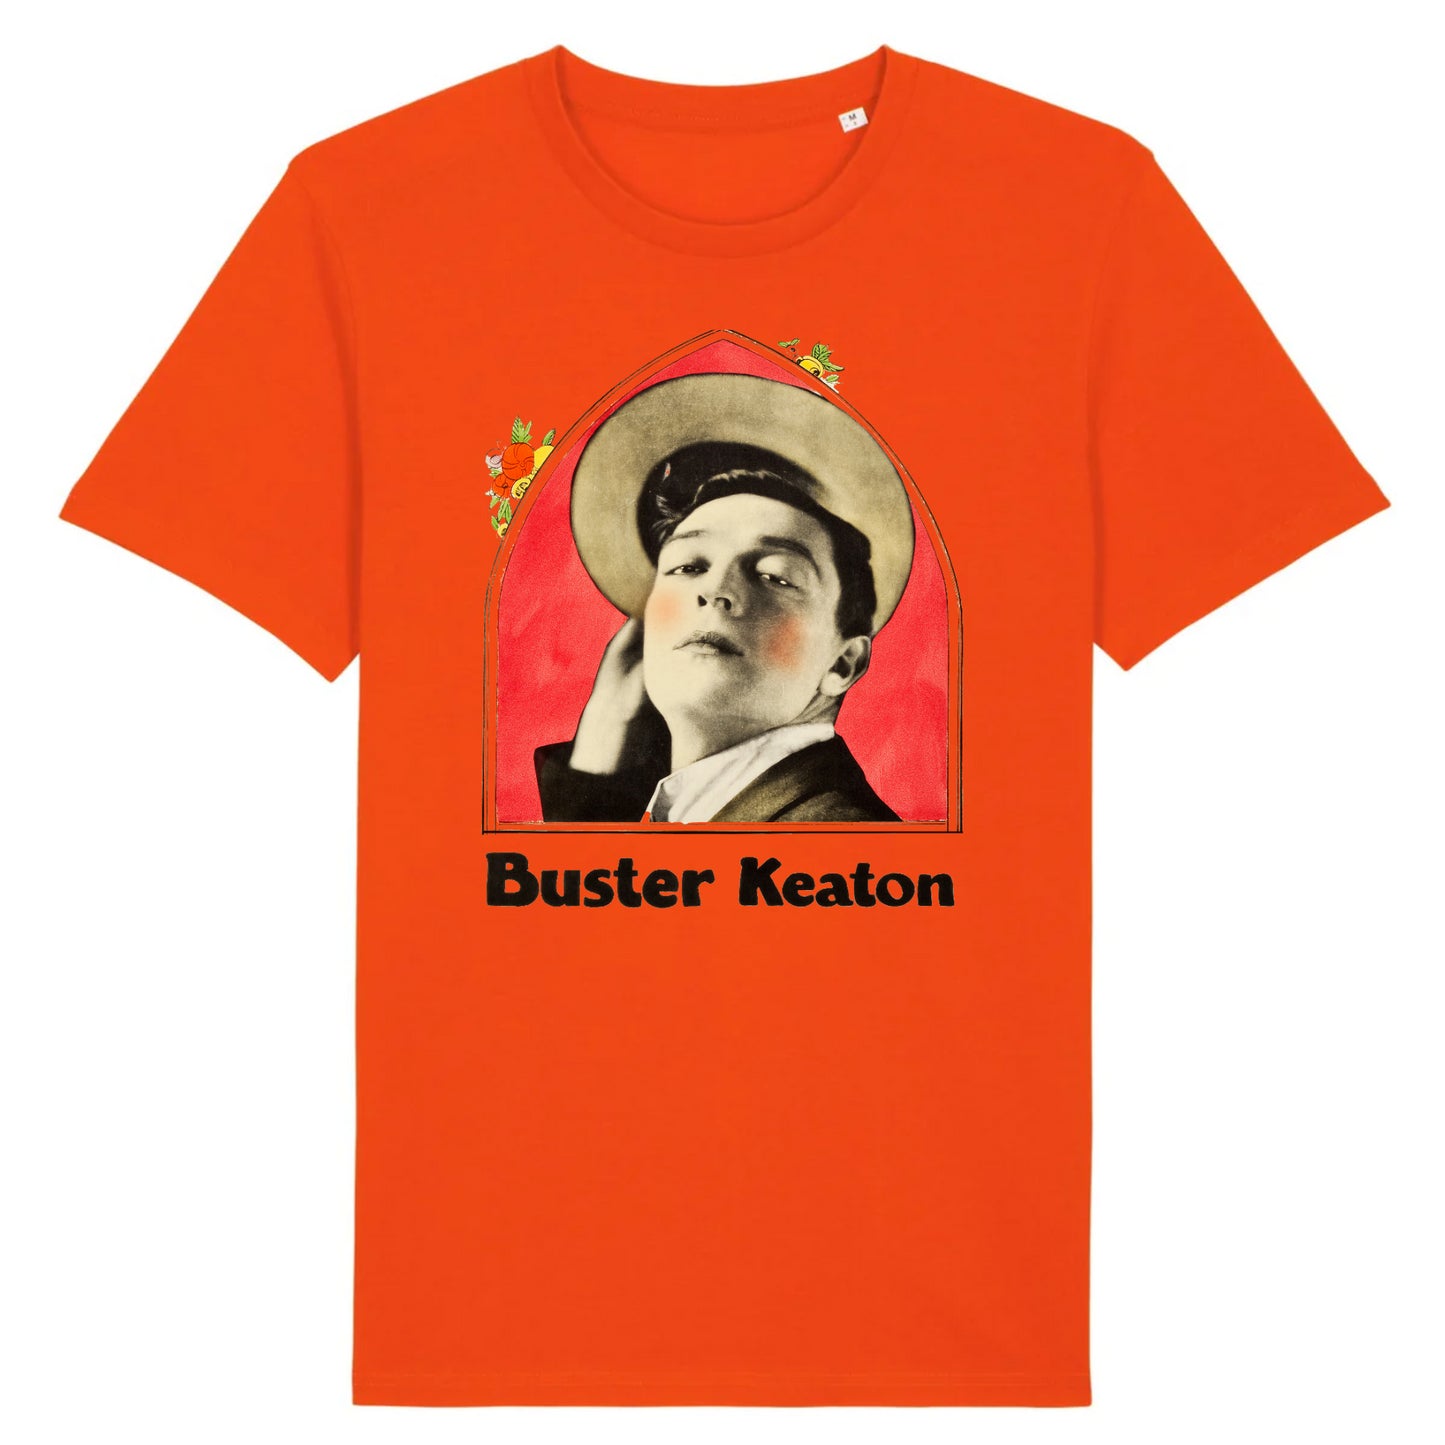 Buster Keaton in Seven Chances 1925 - Organic Cotton T-shirt